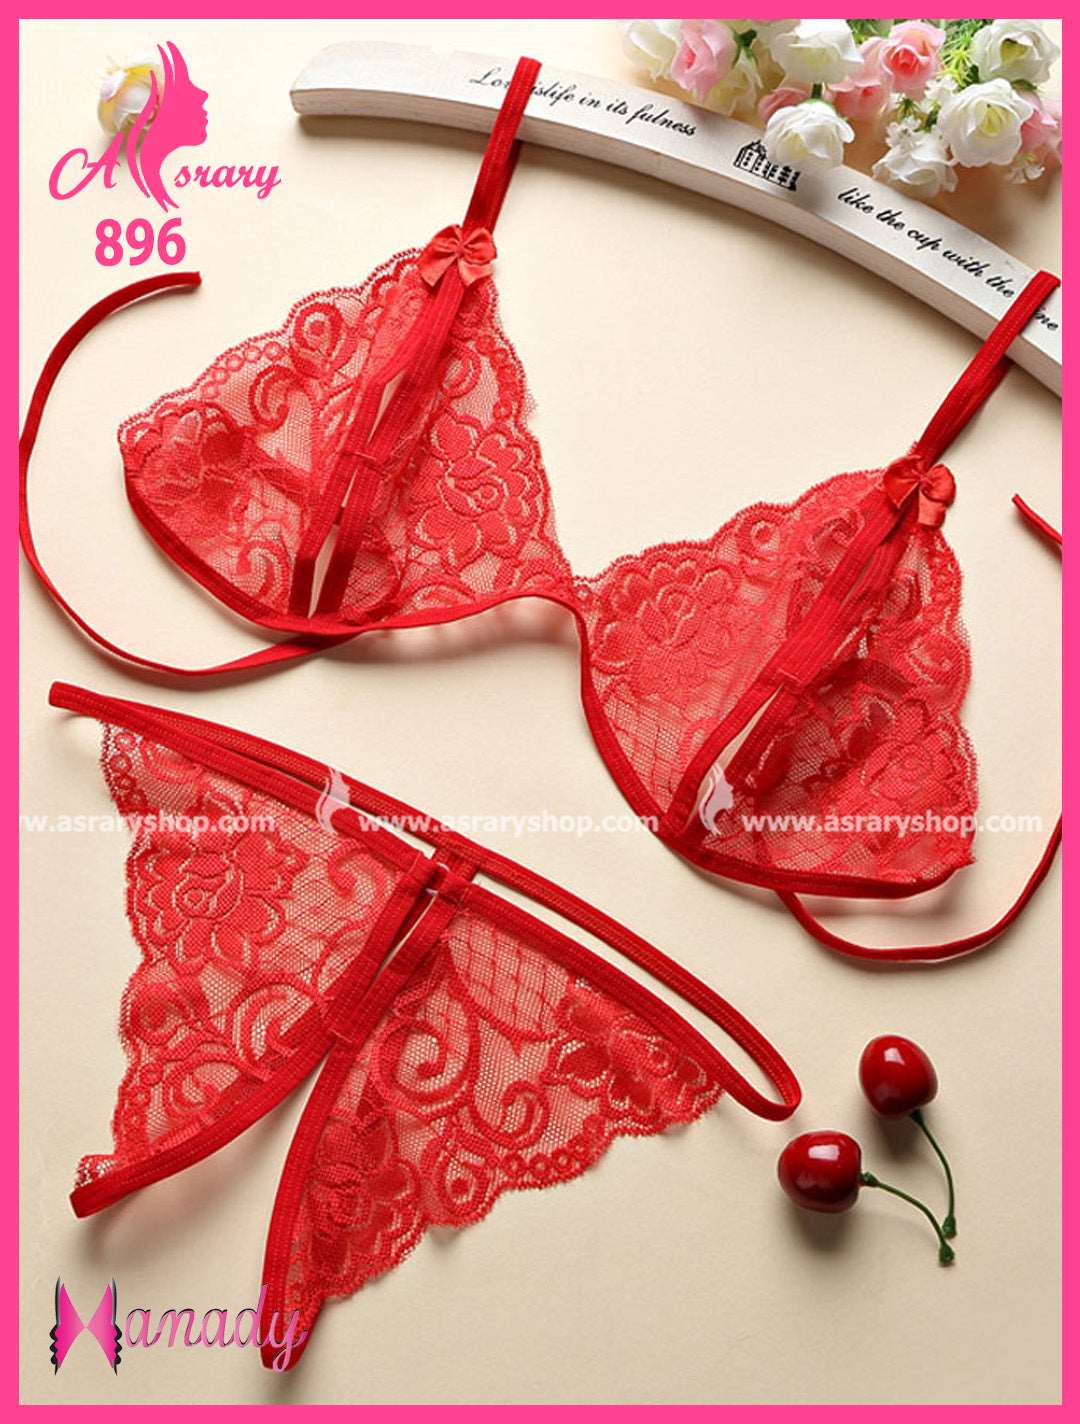 Lace Open Lingerie Underwear Set 896 – Asrary Shop